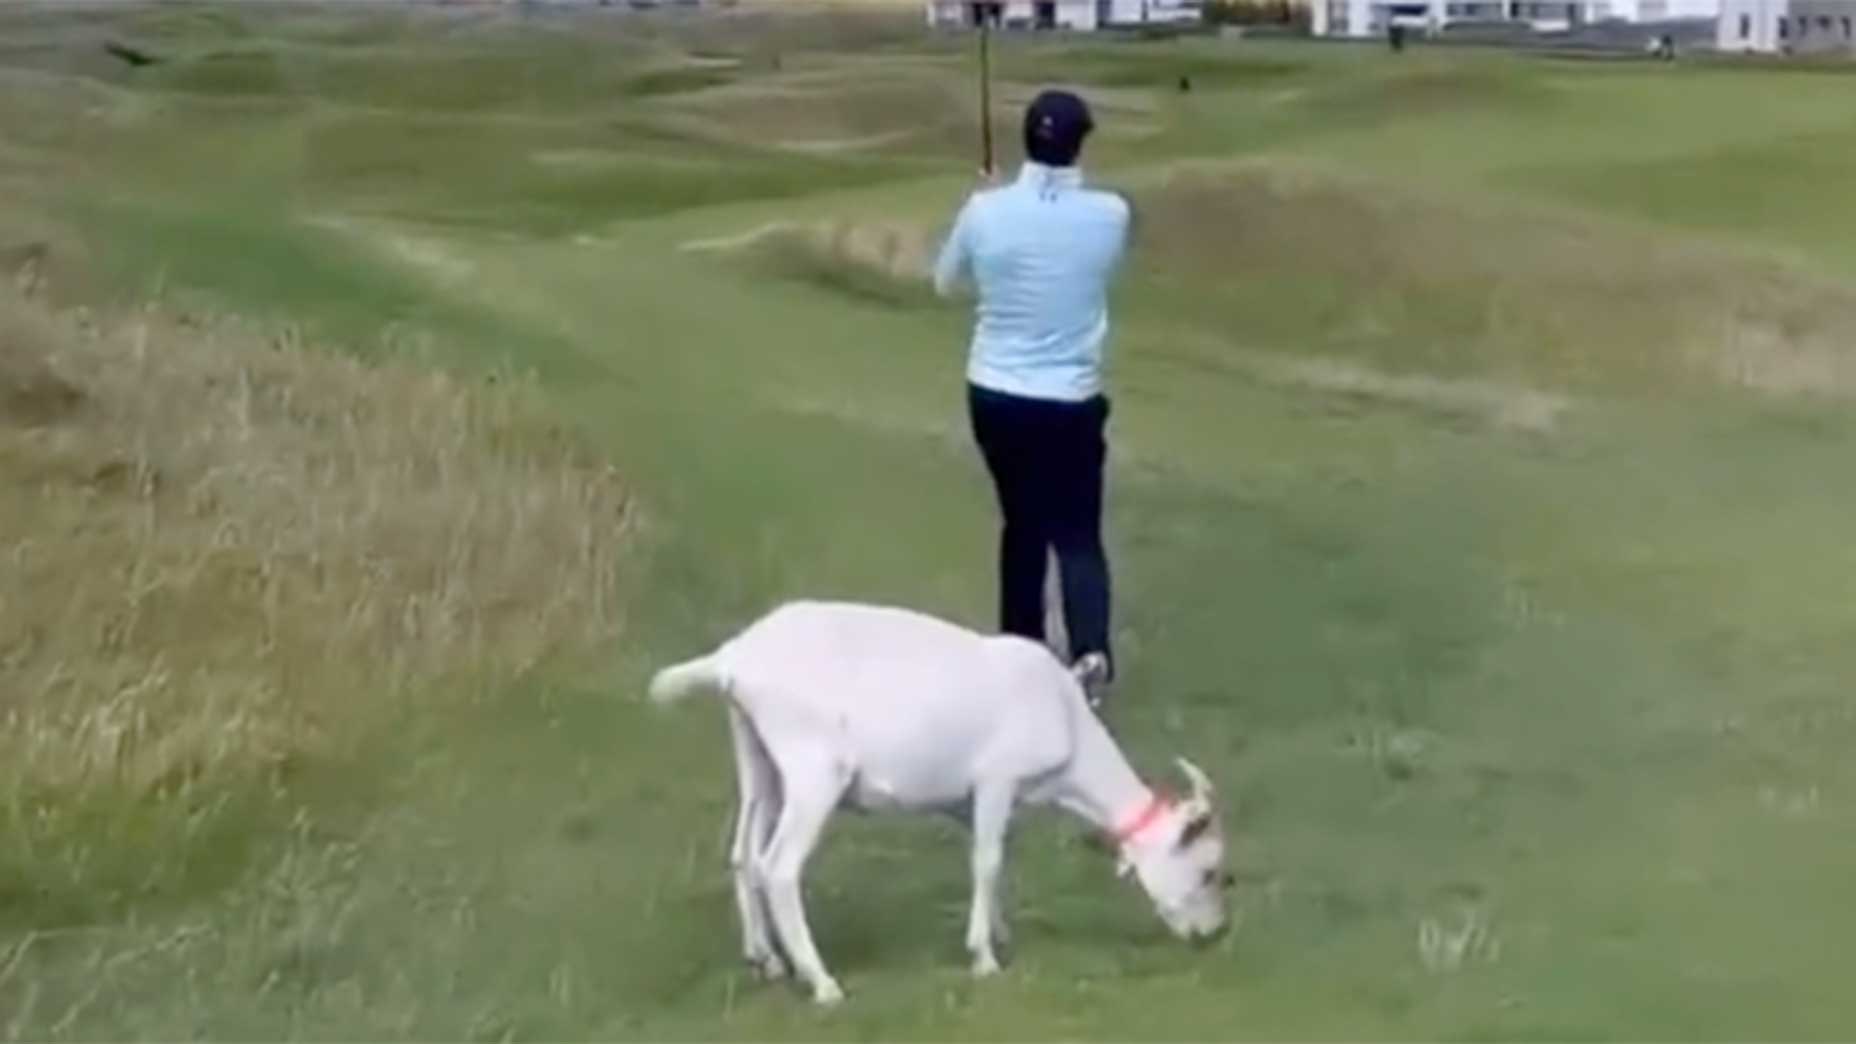 Jordan Spieth strikes with a goat behind him.